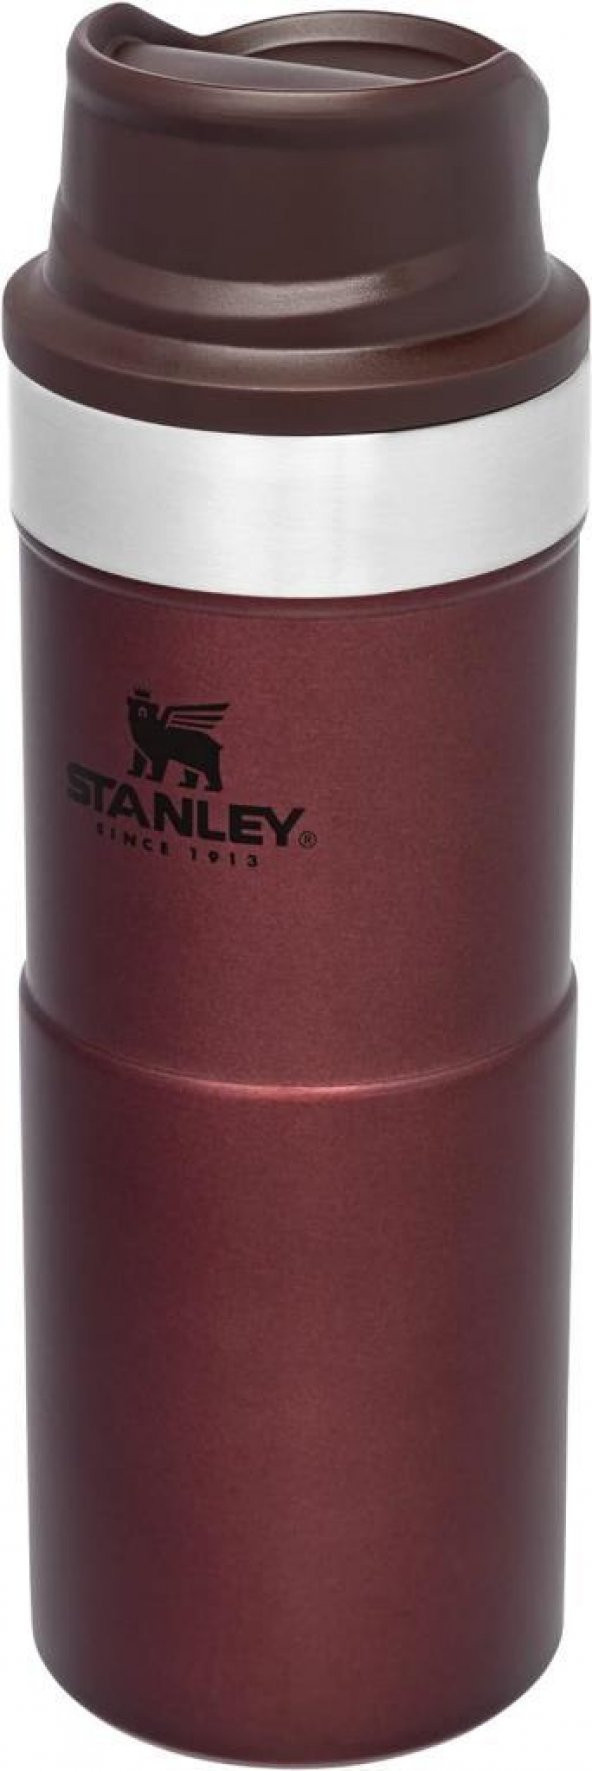 Stanley Klasik Trigger-Action Bordo Termos Bardak 0.35 LT